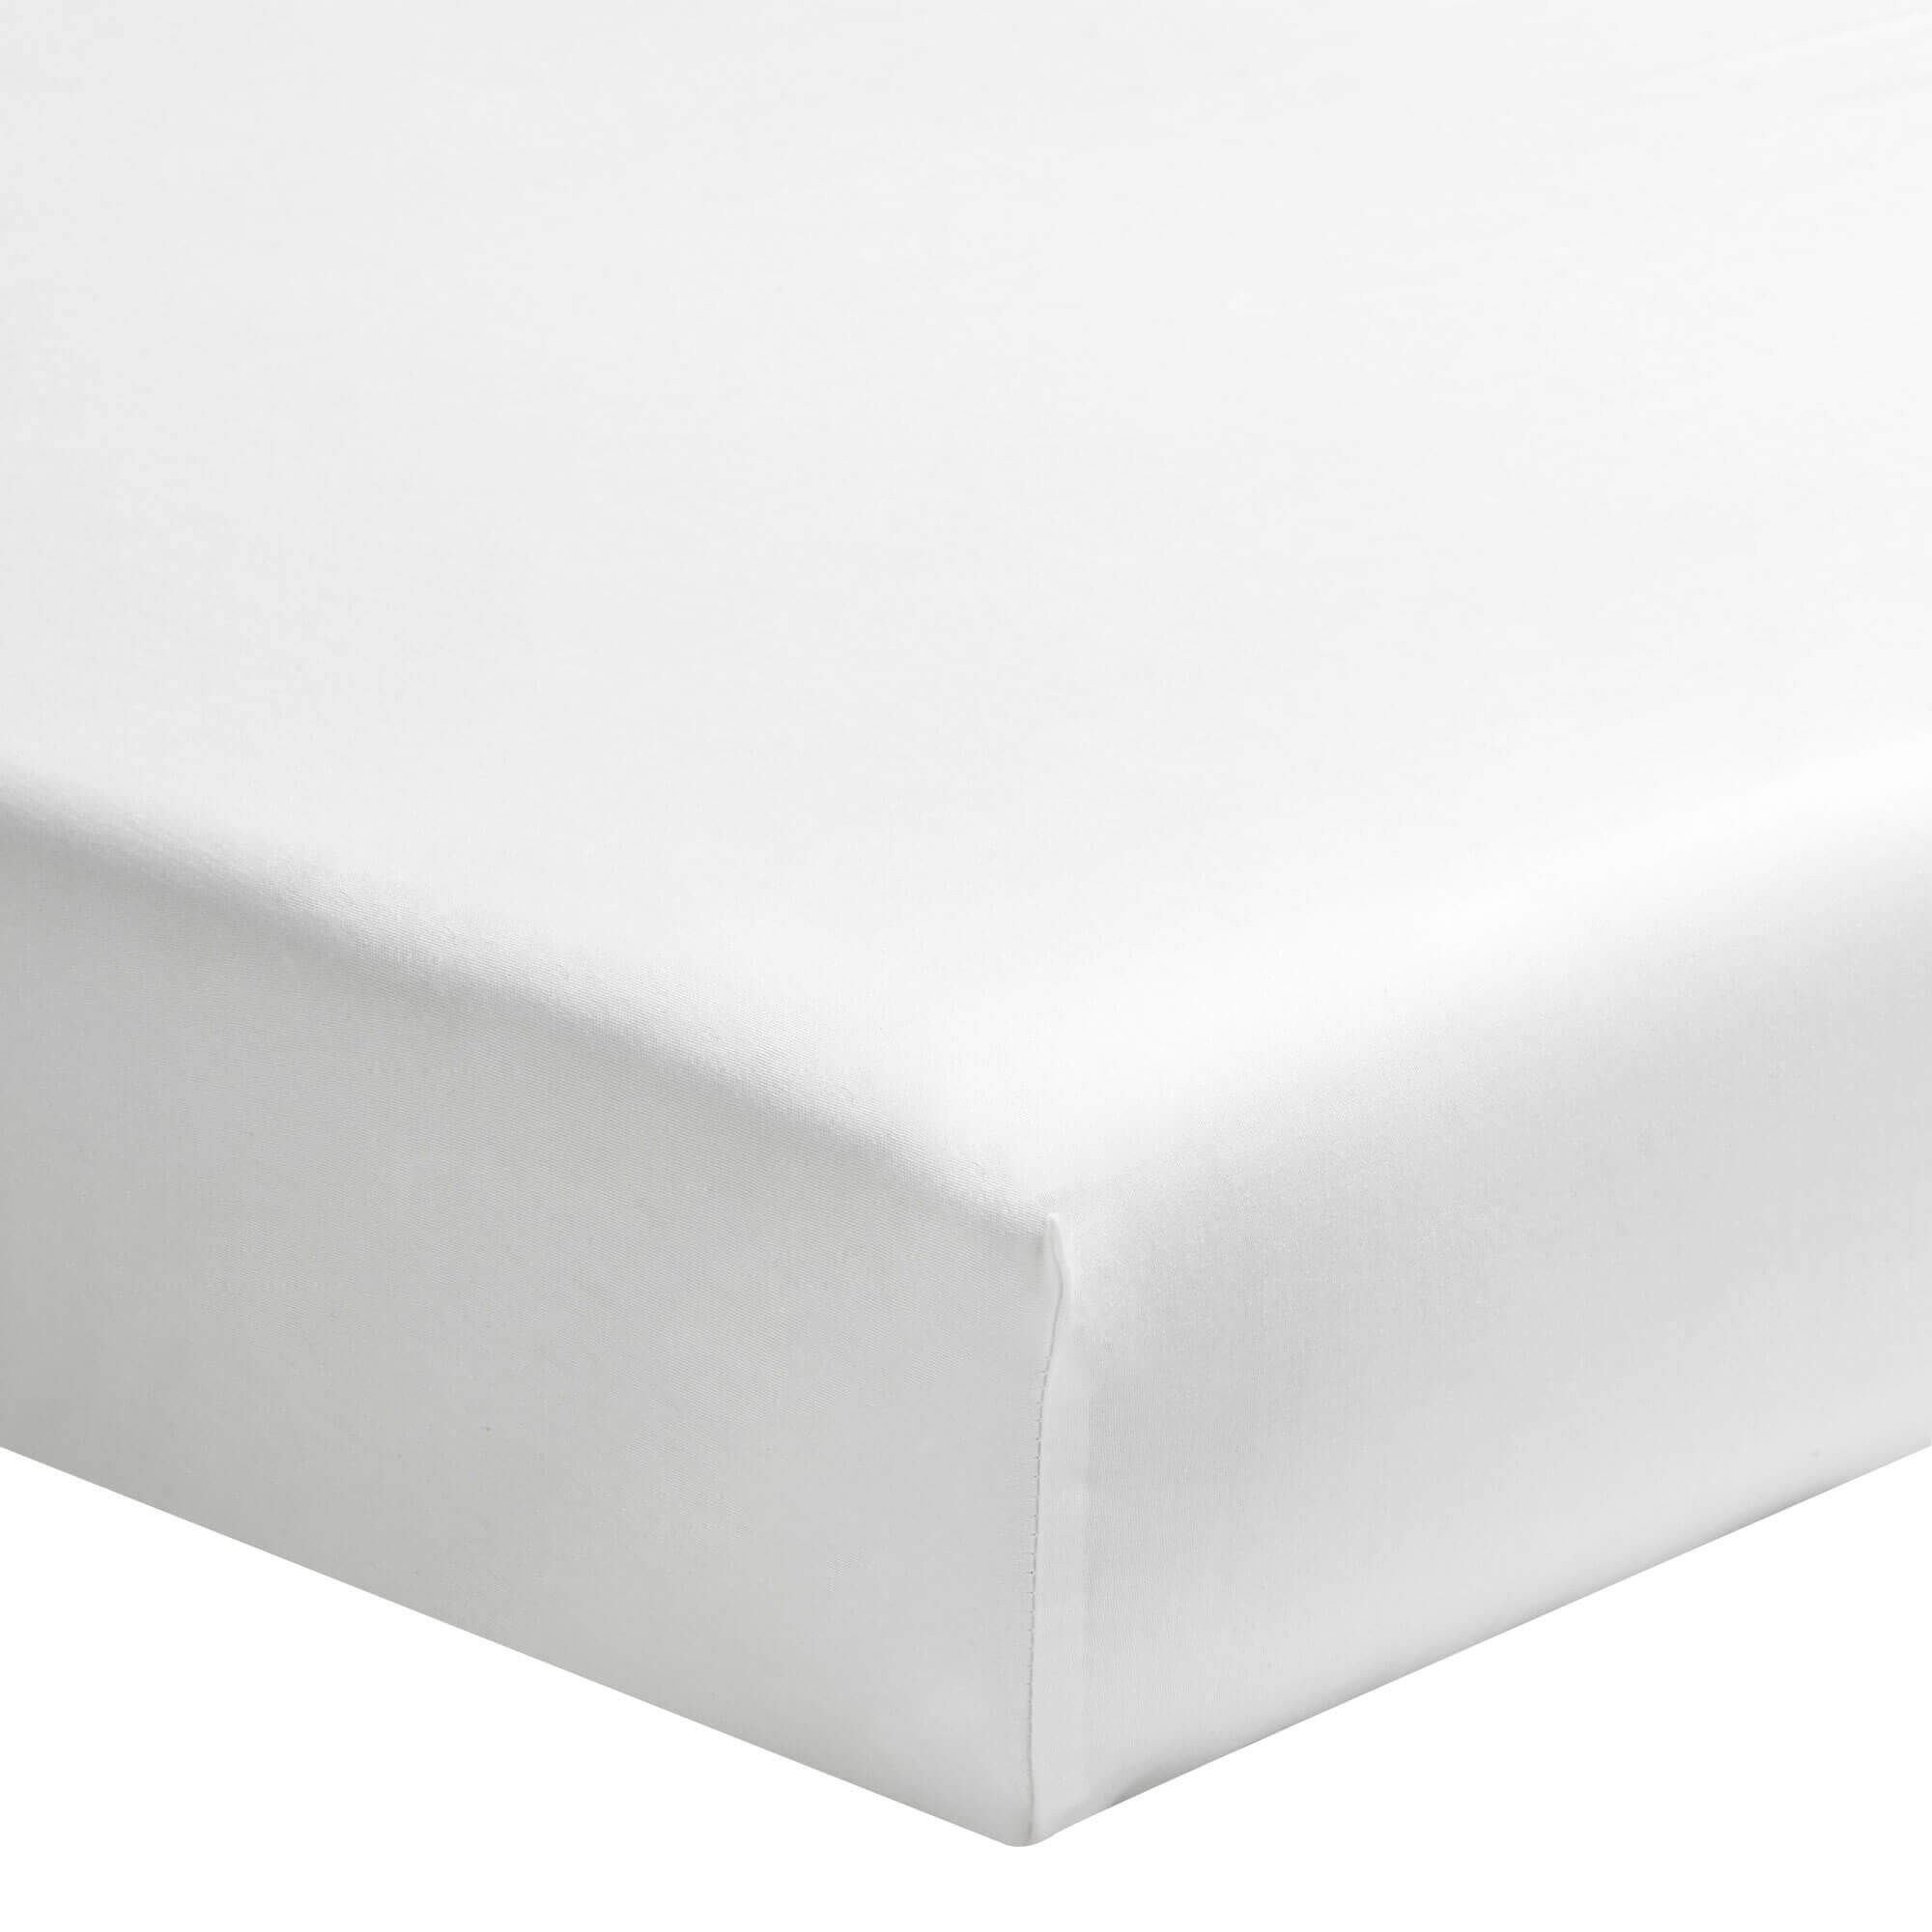 leerplan stap Malawi Essix, hoeslaken wit gekamd katoen 200TC voor matras tot 20 cm hoog -  LiensLinnenwinkel.nl